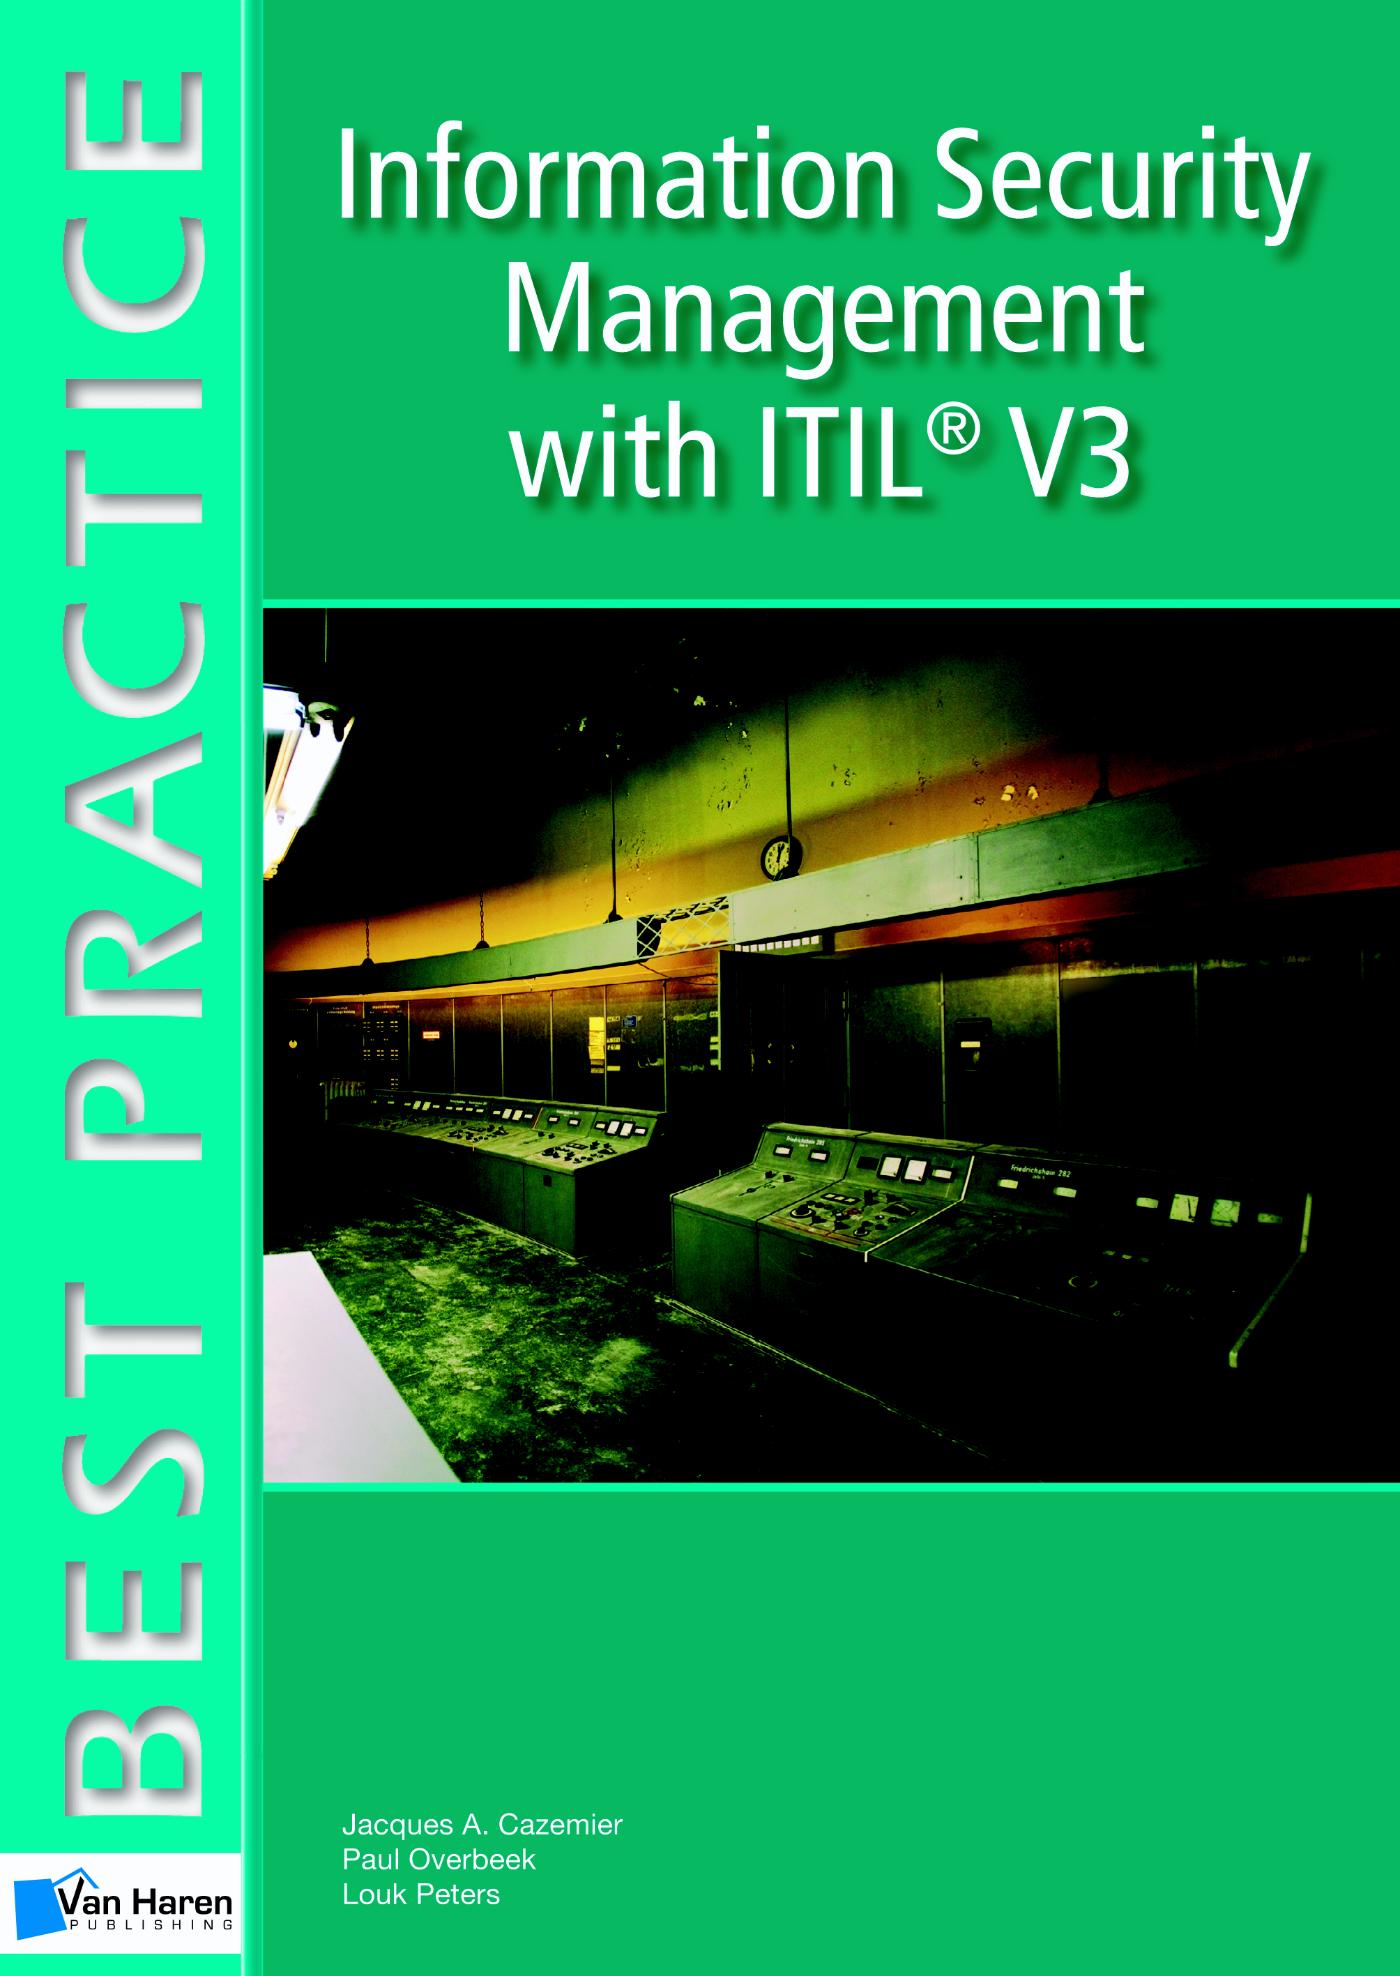 Information Security Management with ITIL® V3 (Ebook)